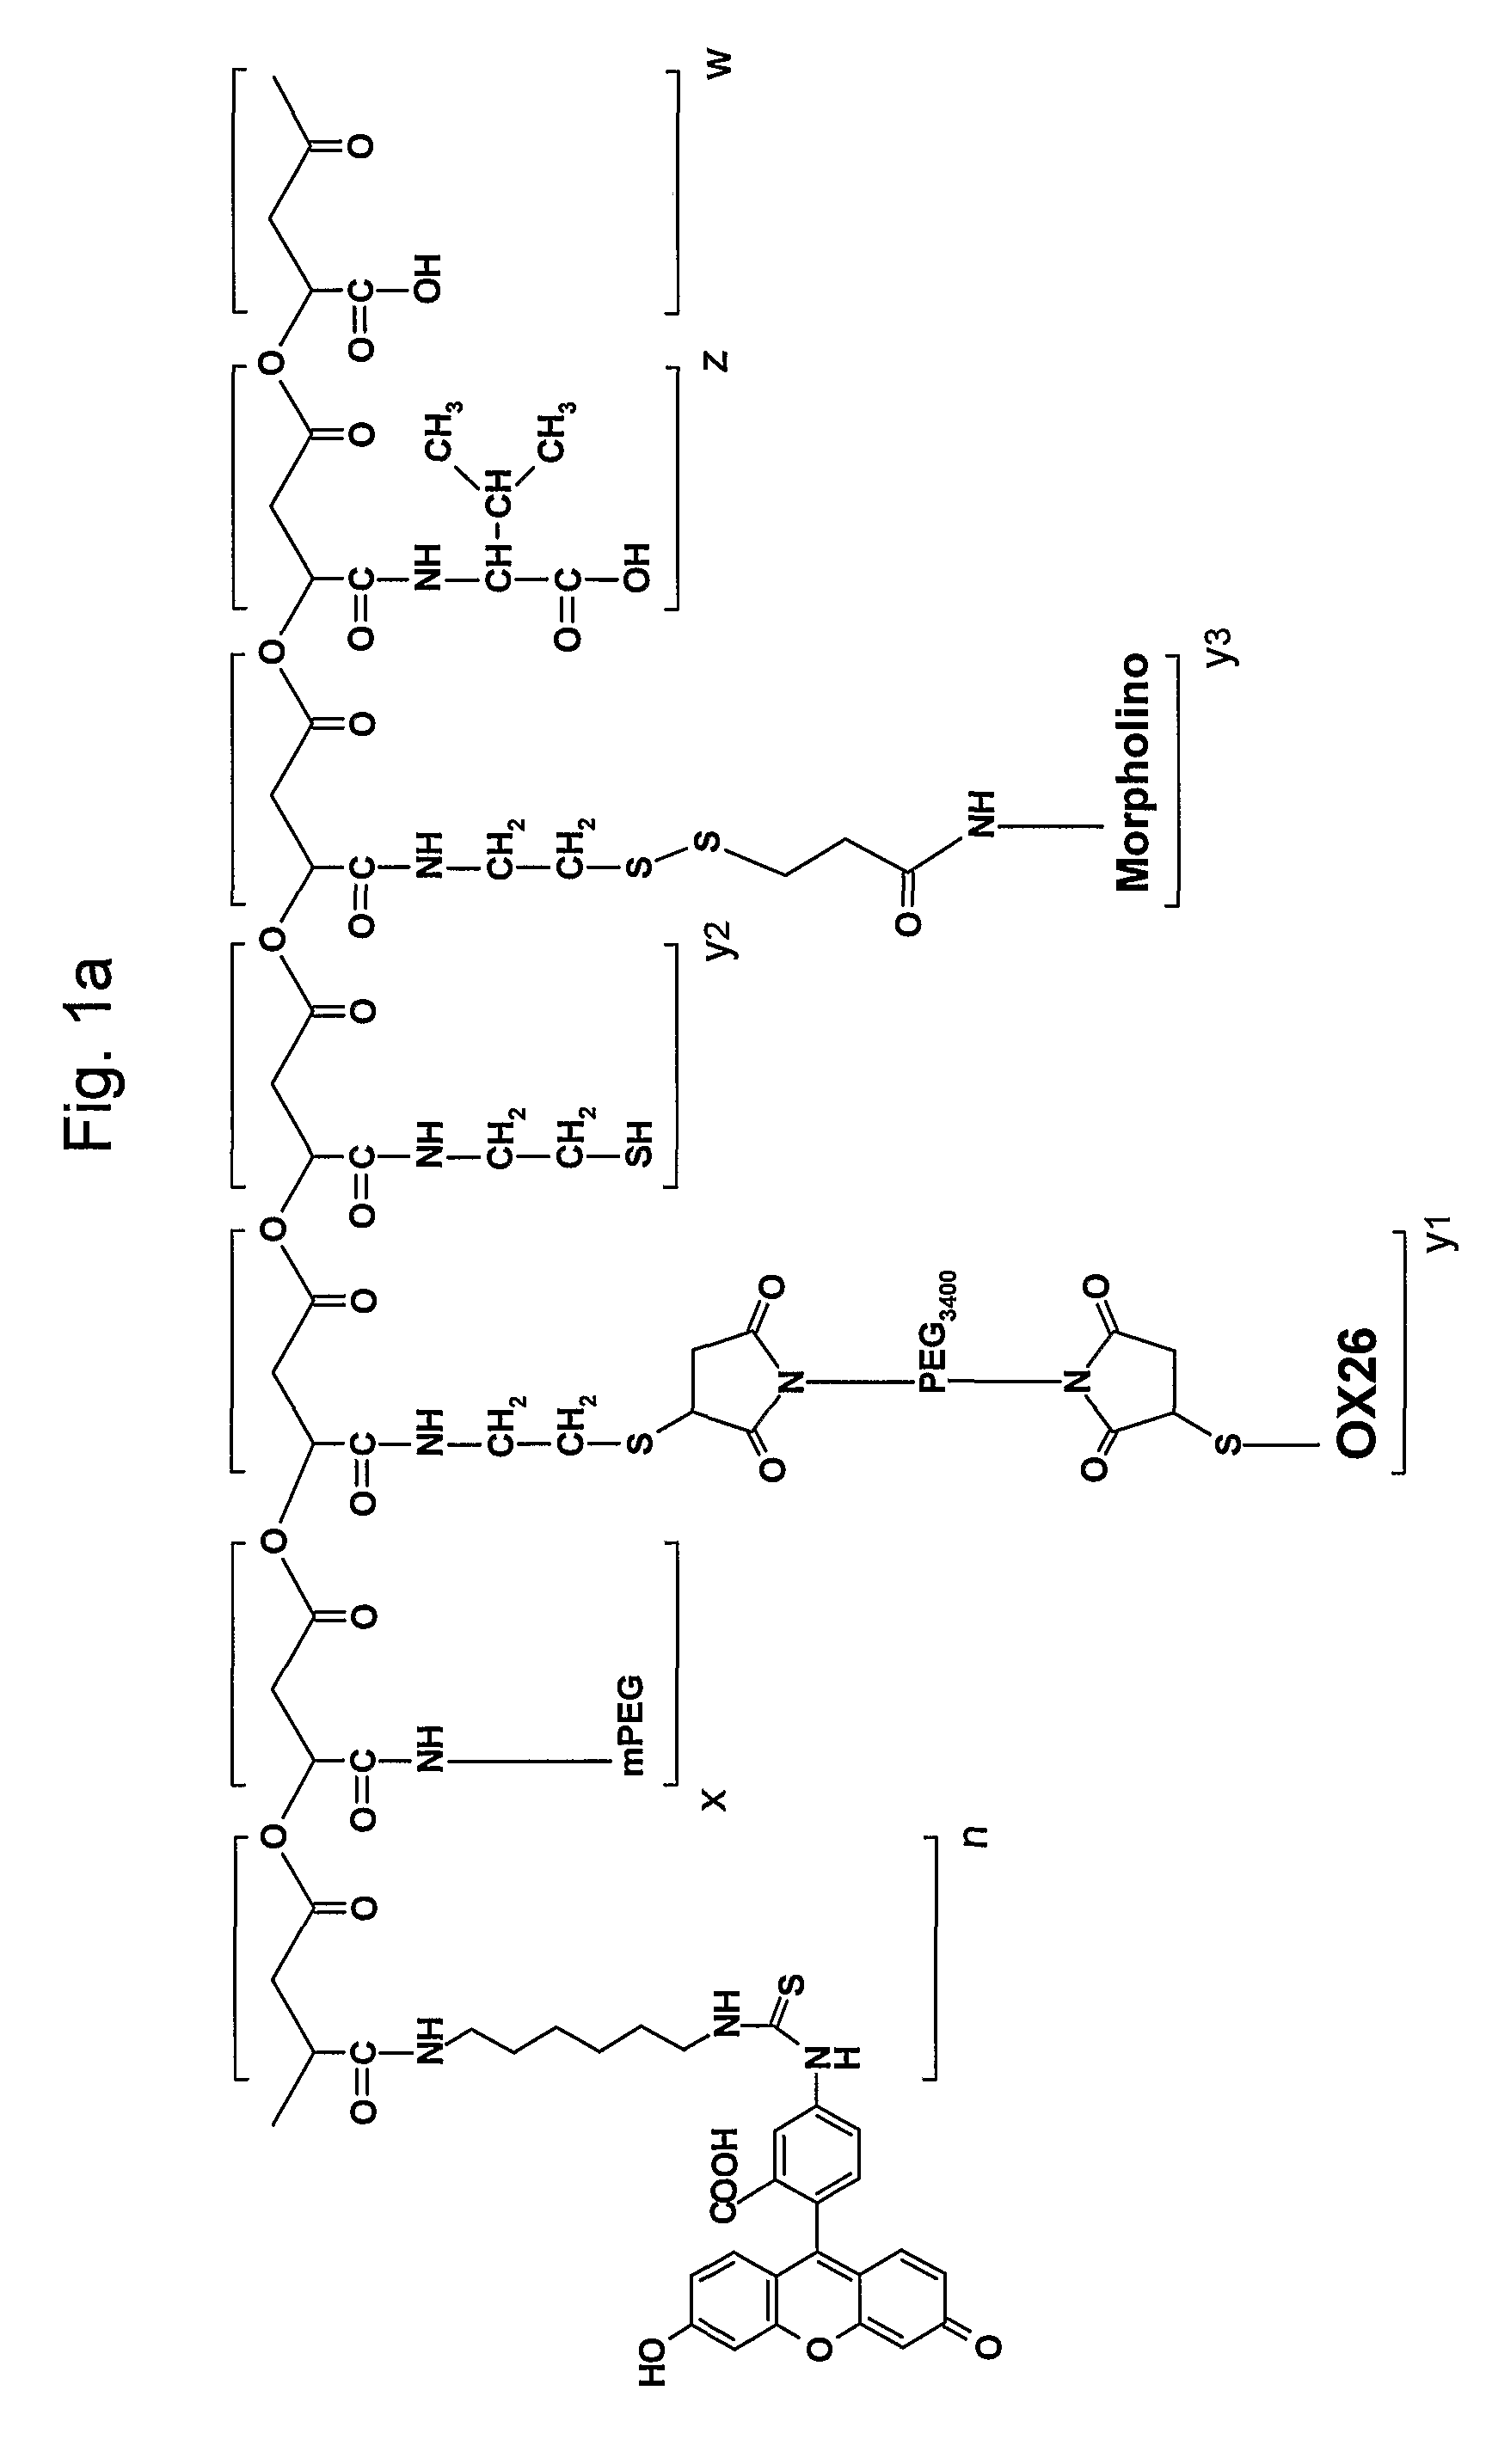 Polymalic acid-based multi-functional drug delivery system